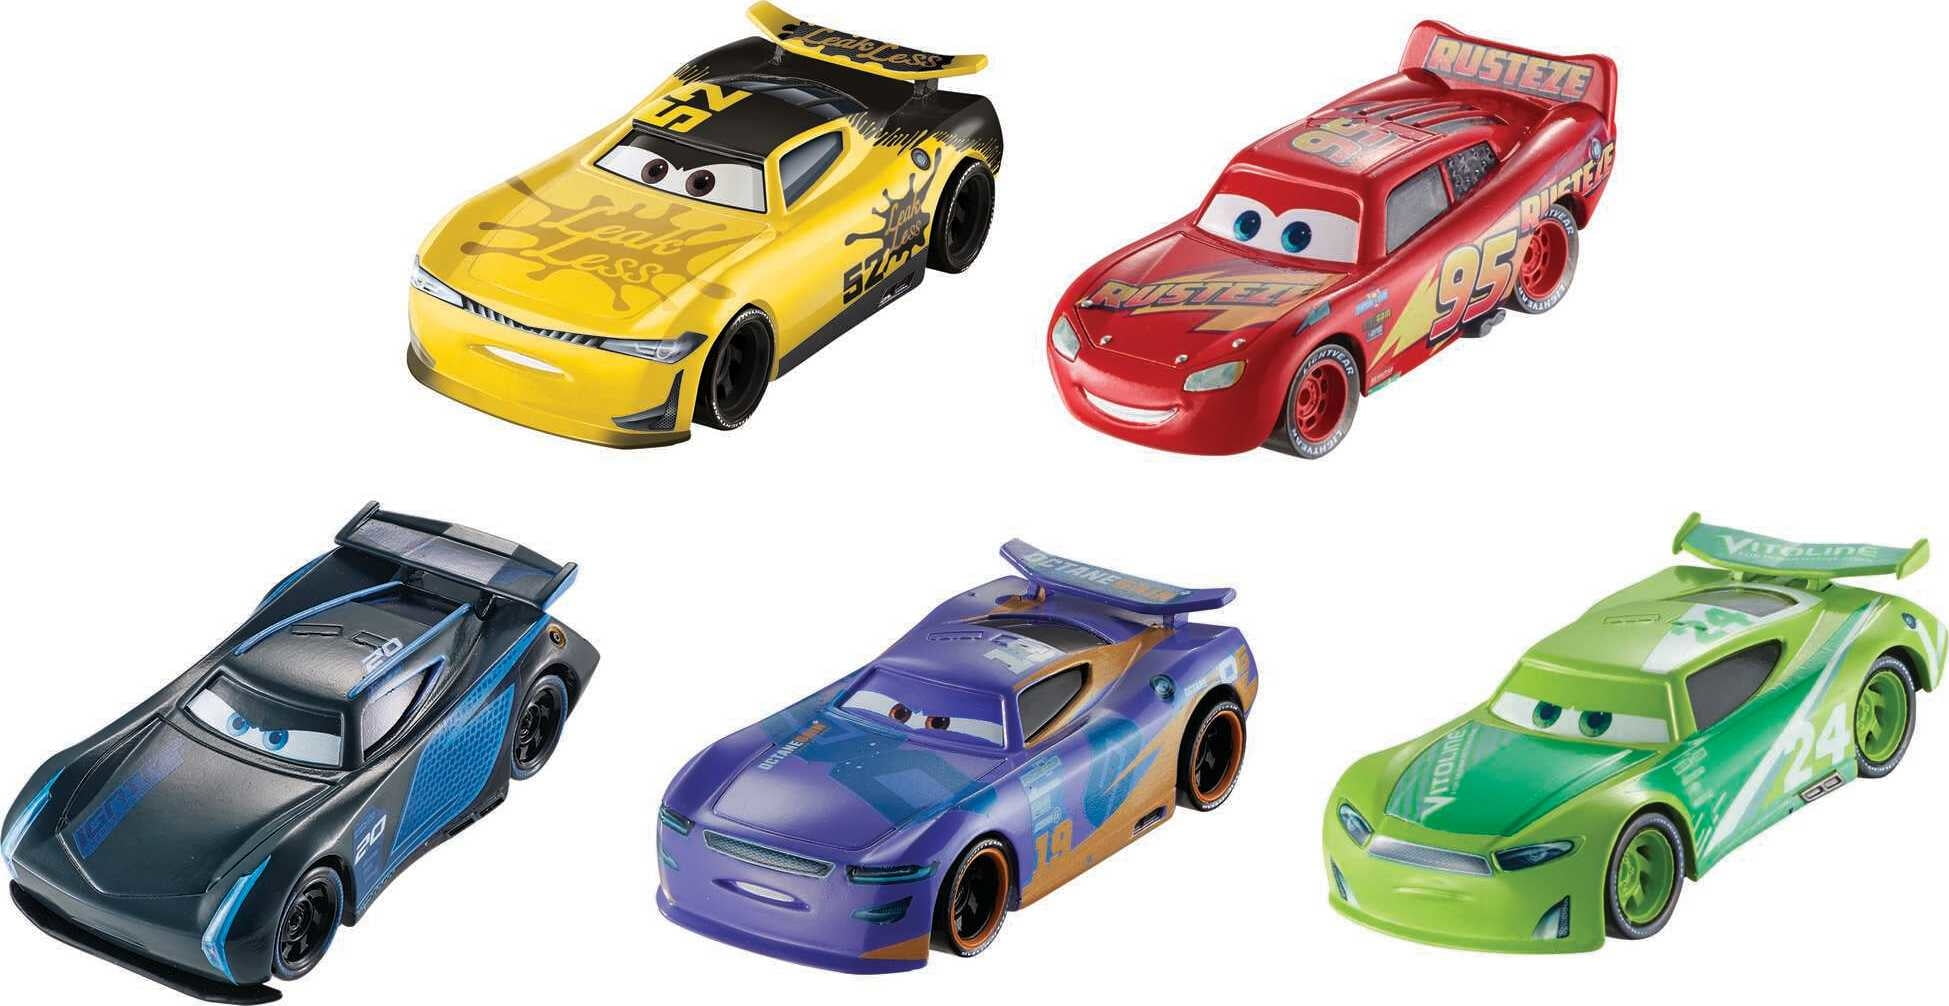 Disney Pixar Cars Disney and Pixar Cars 3 Vehicle 5-Packs (Character May Vary)